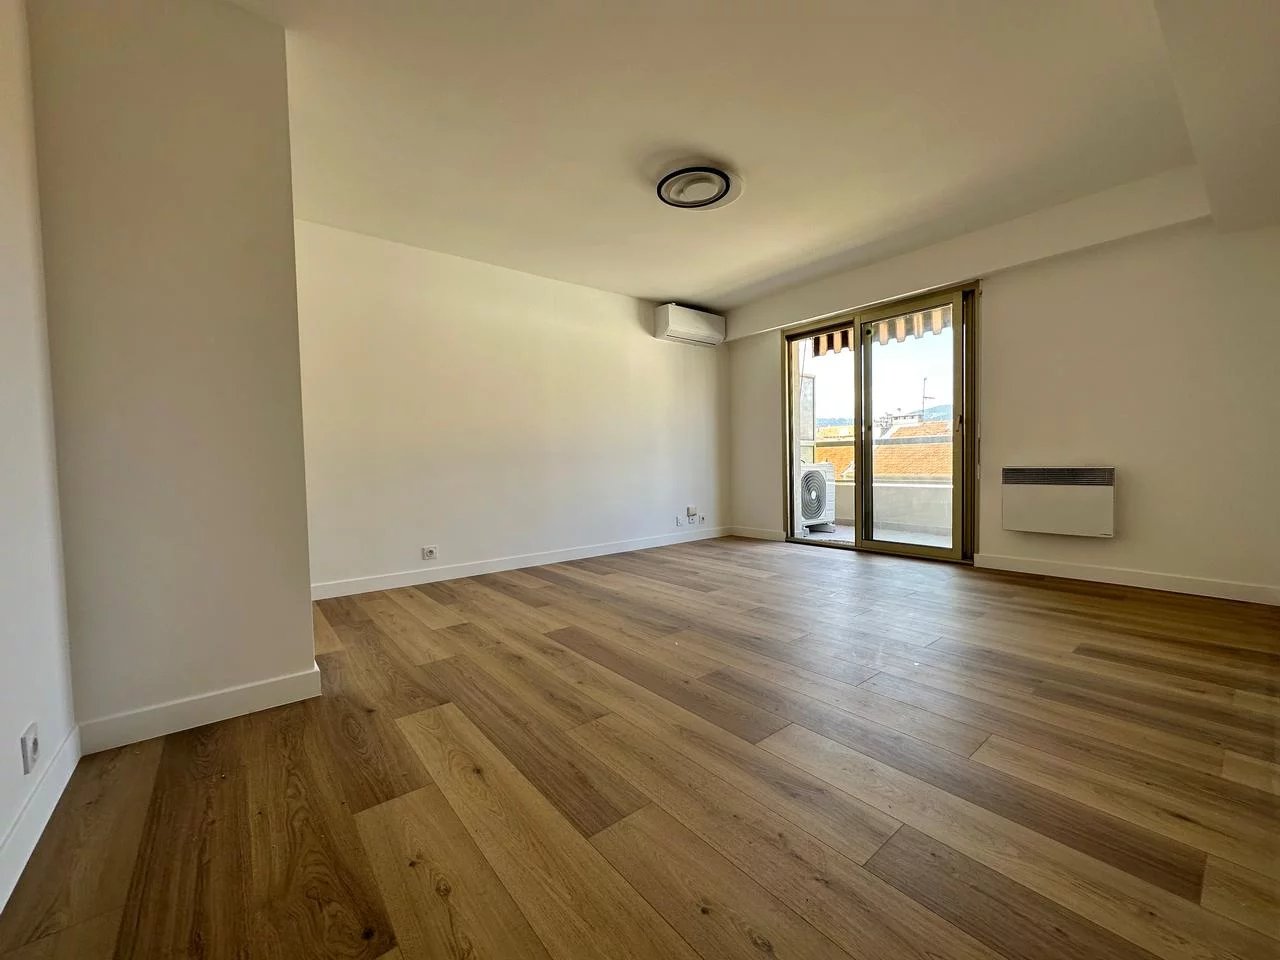 Appartement  3 Locali 62.05m2  In vendita   590 000 €